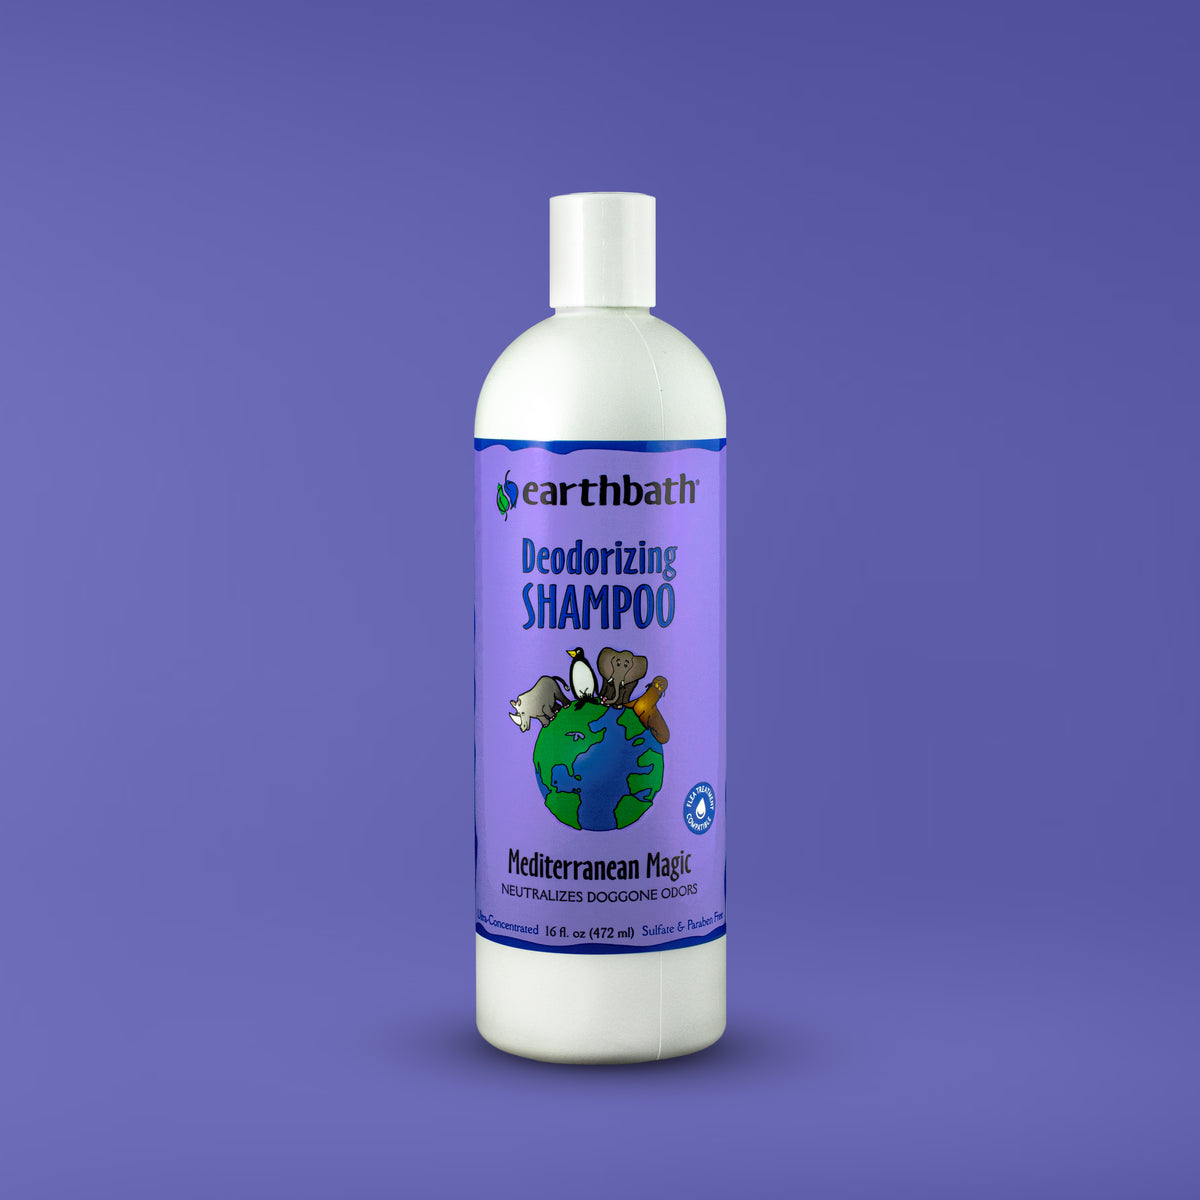 earthbath® Deodorizing Shampoo, Mediterranean Magic, Neutralizes Doggone Odors, Made in USA, 16 oz